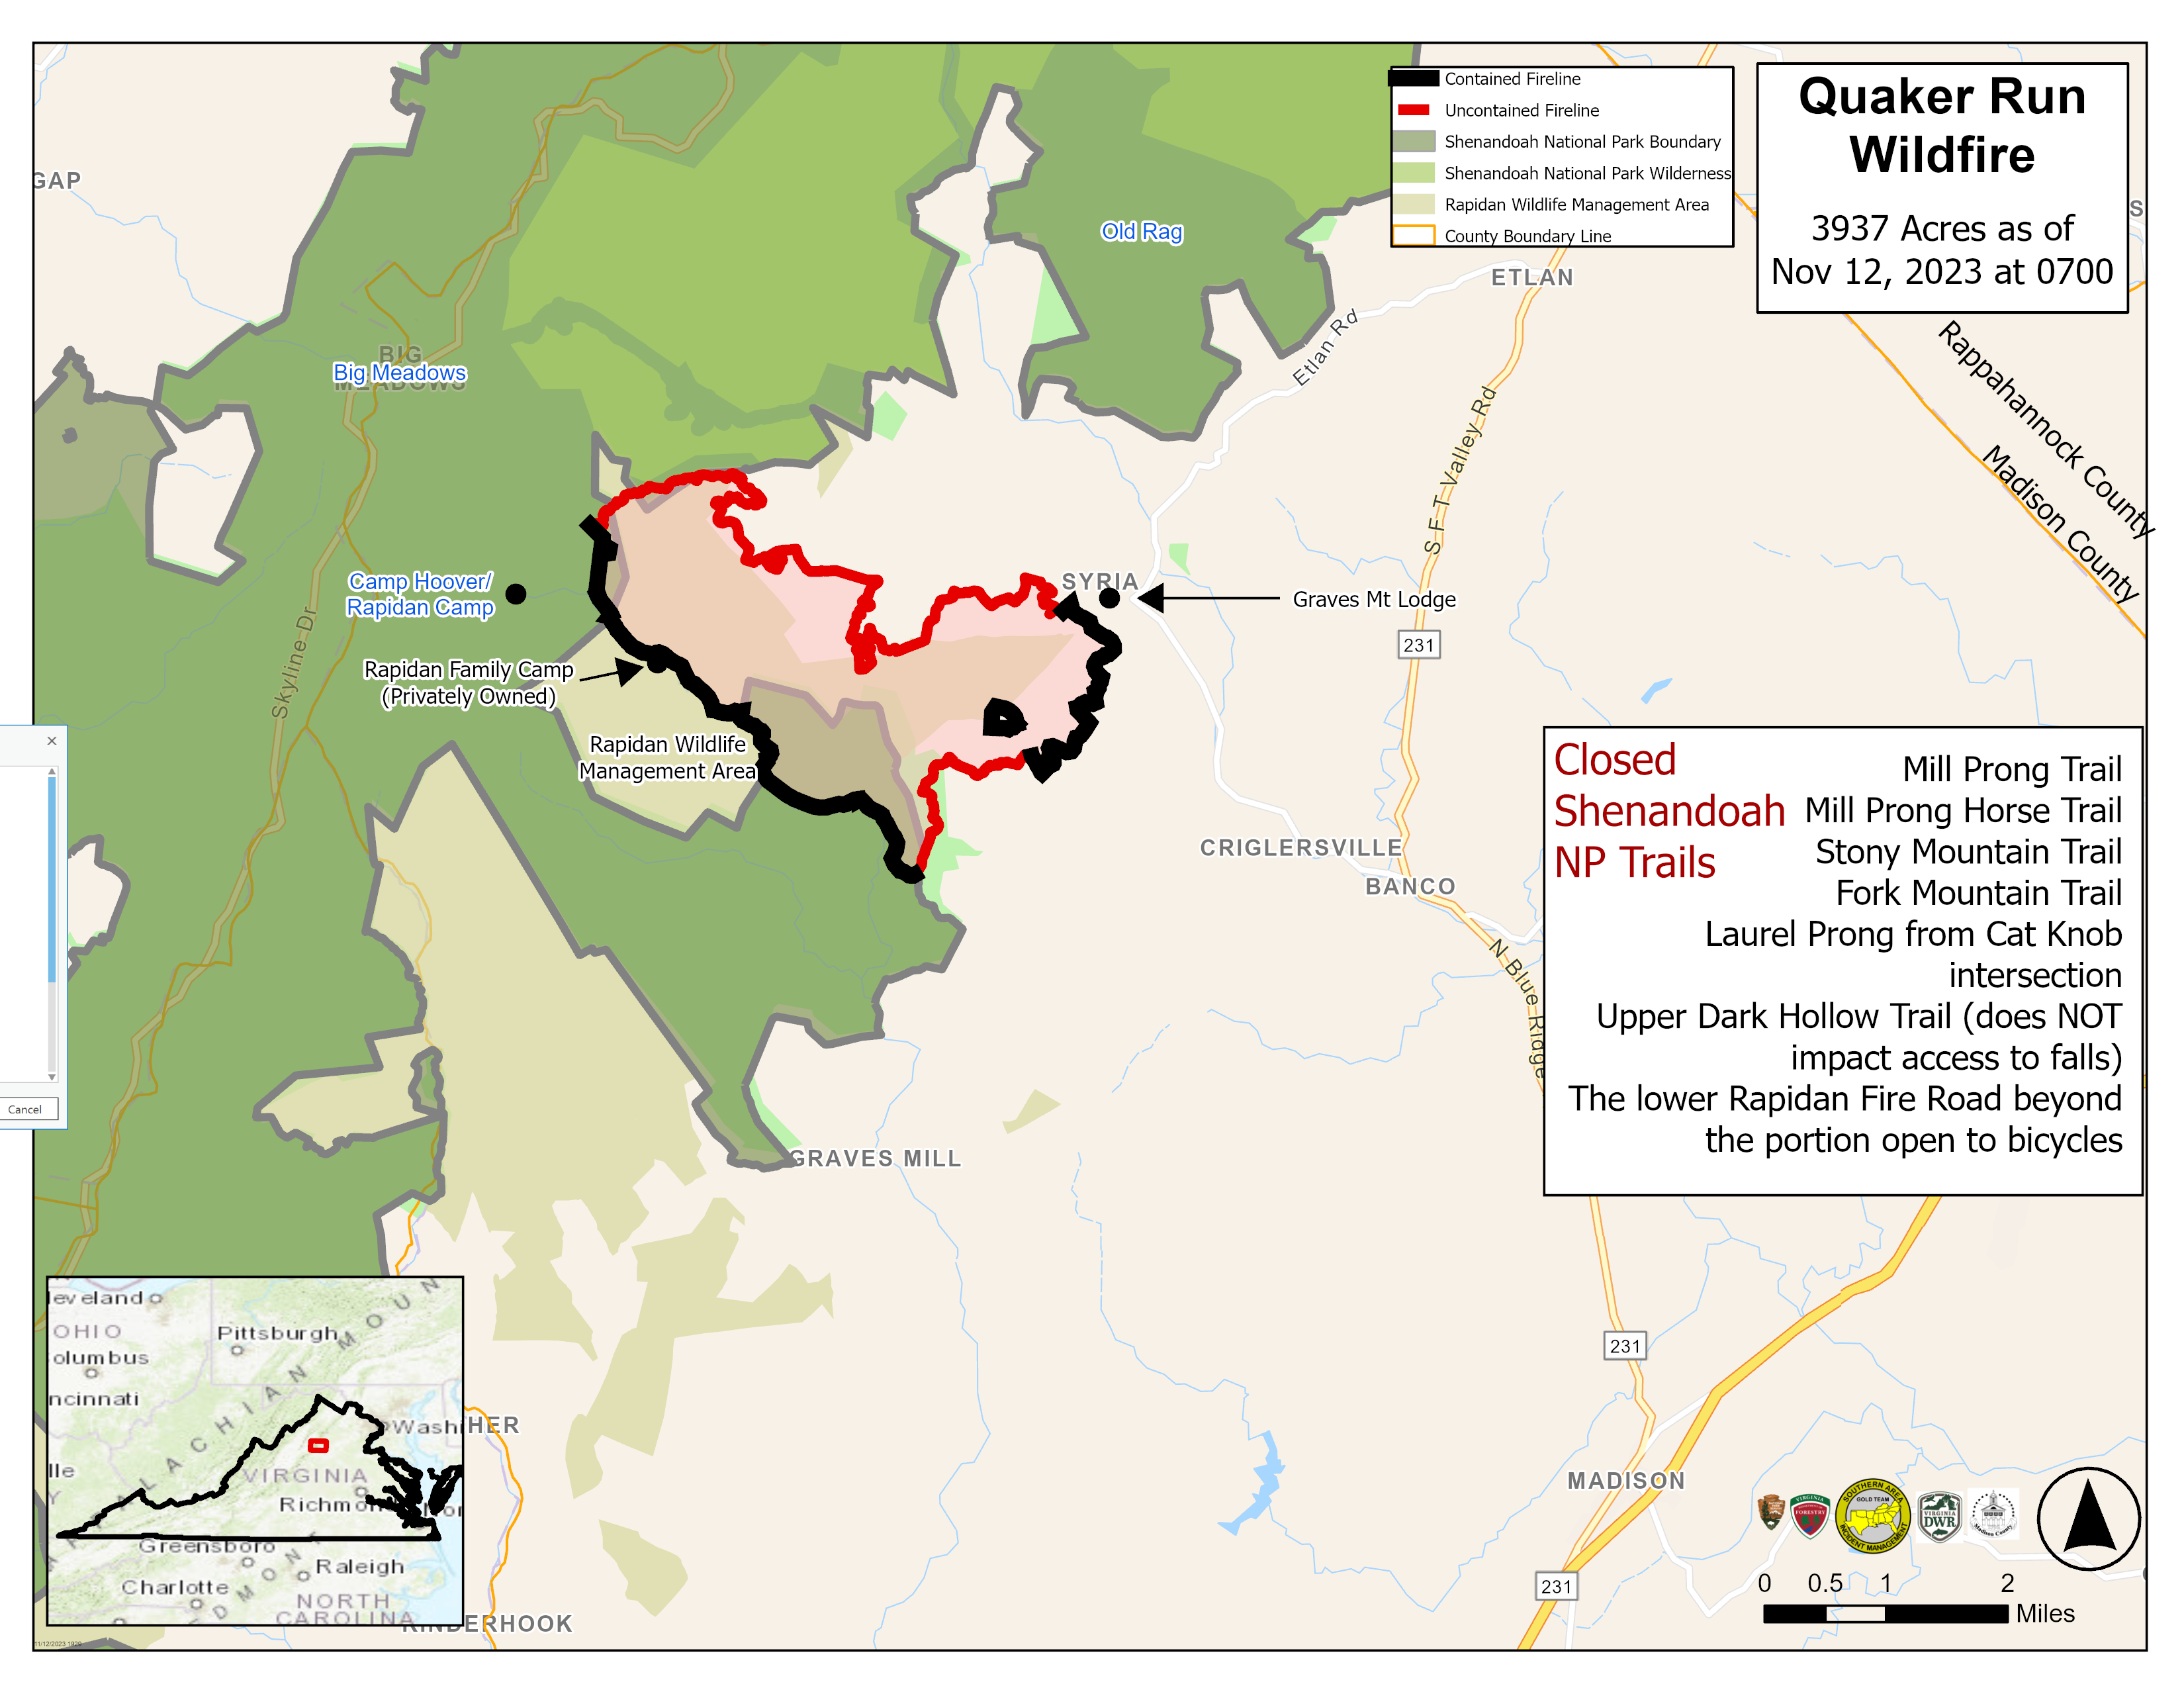 Map of Quaker Run Fire perimeter showing 41% containment.